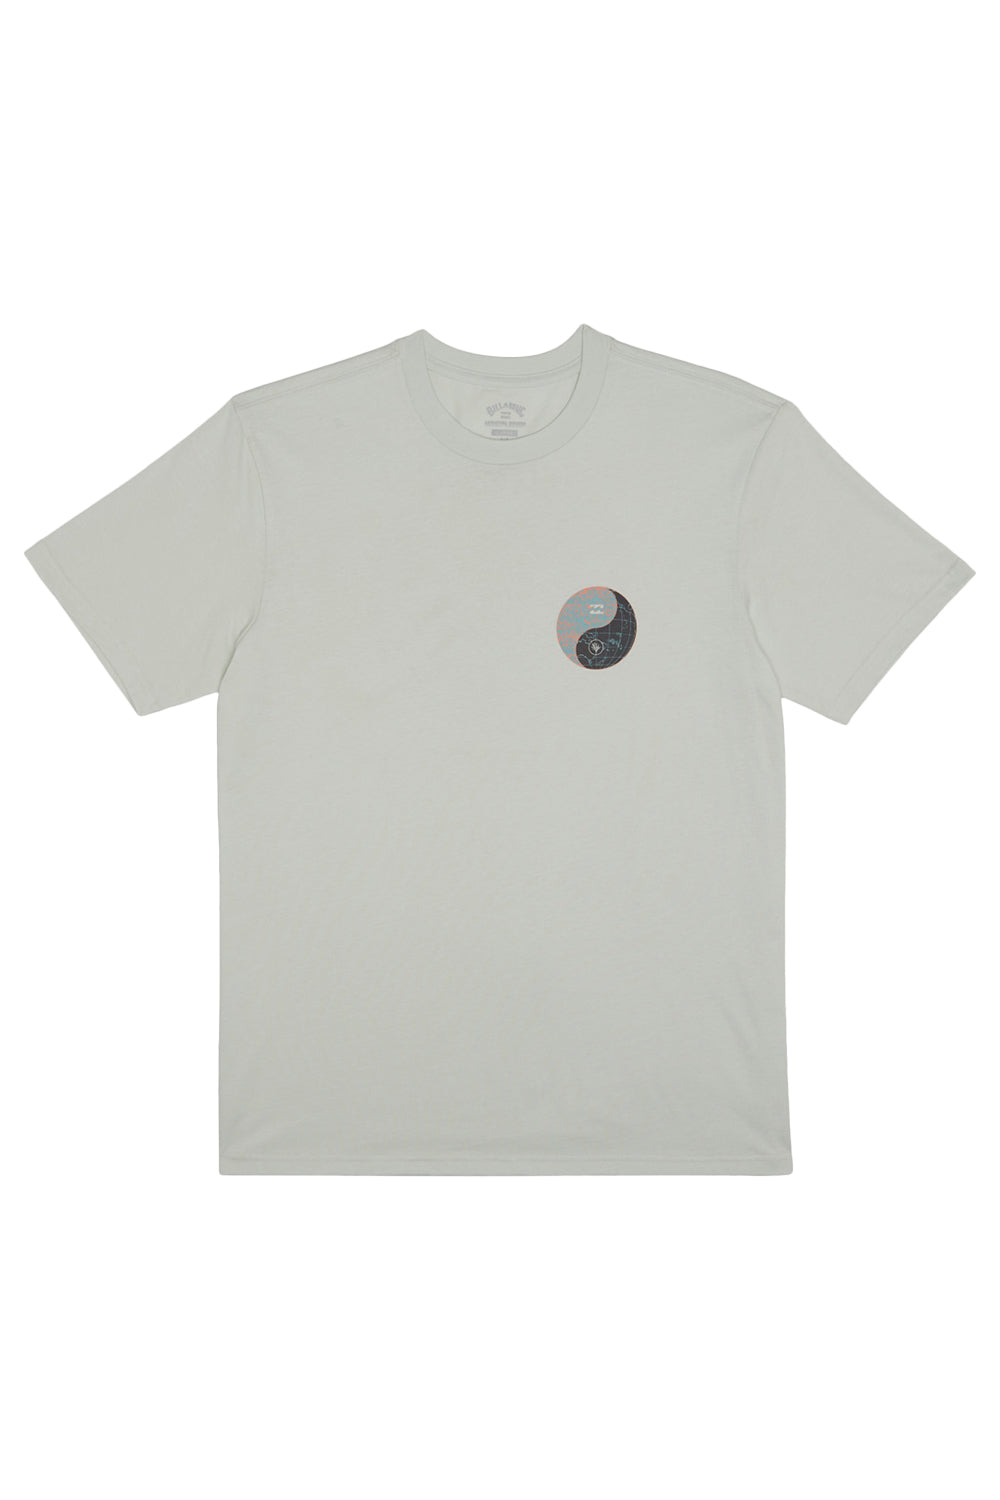 Billabong Mens Yin Yang T-Shirt